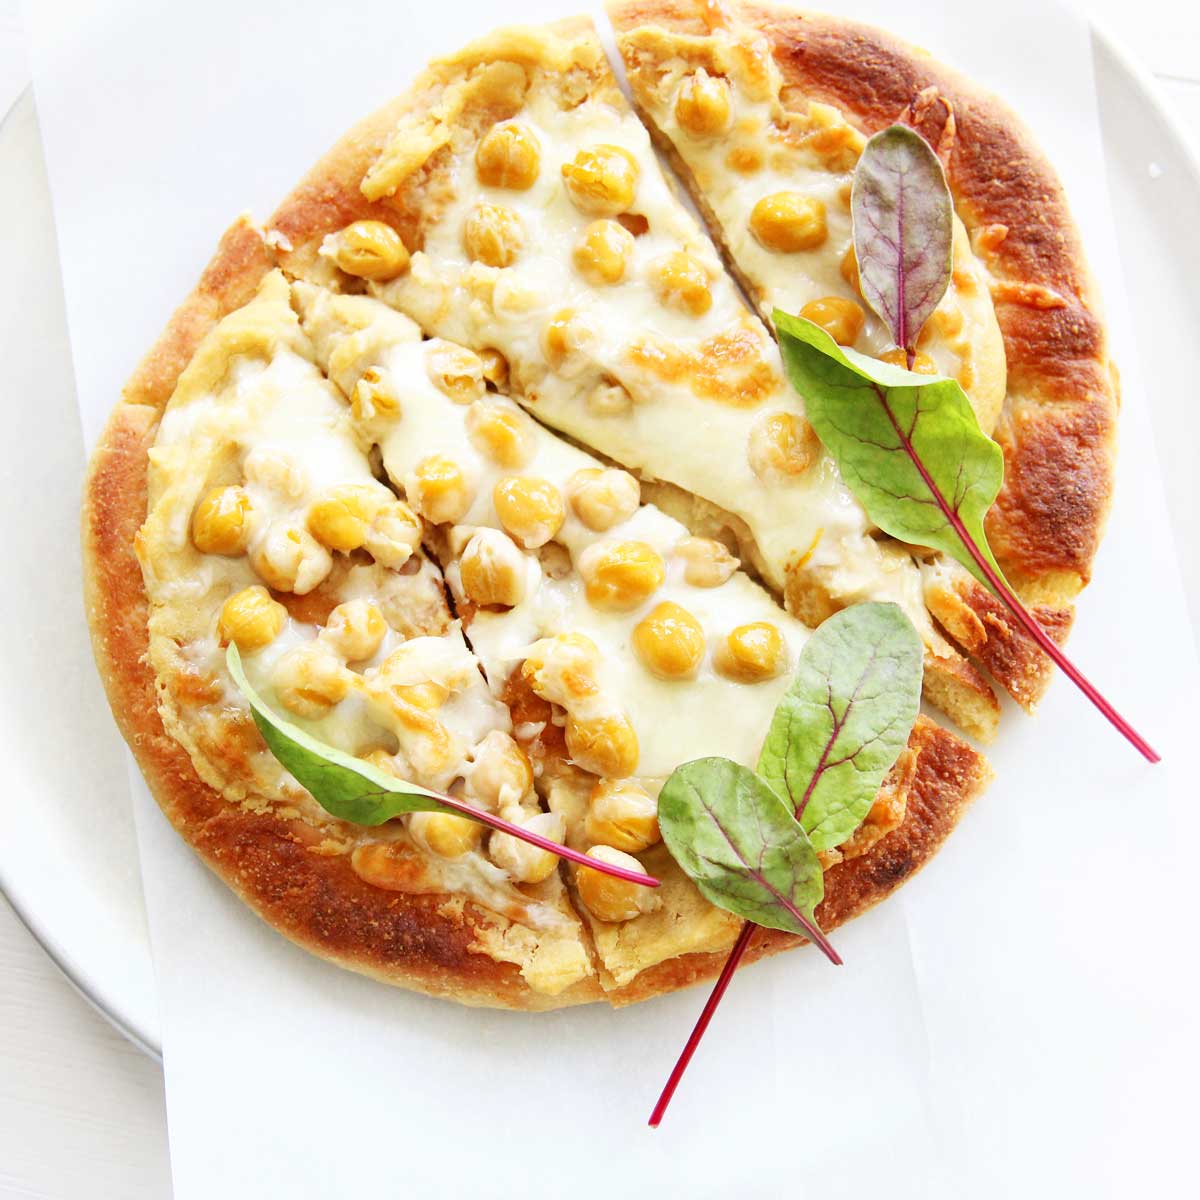 vegan flatbread topping ideas and flatbread pizza recipes - hummus chickpeas